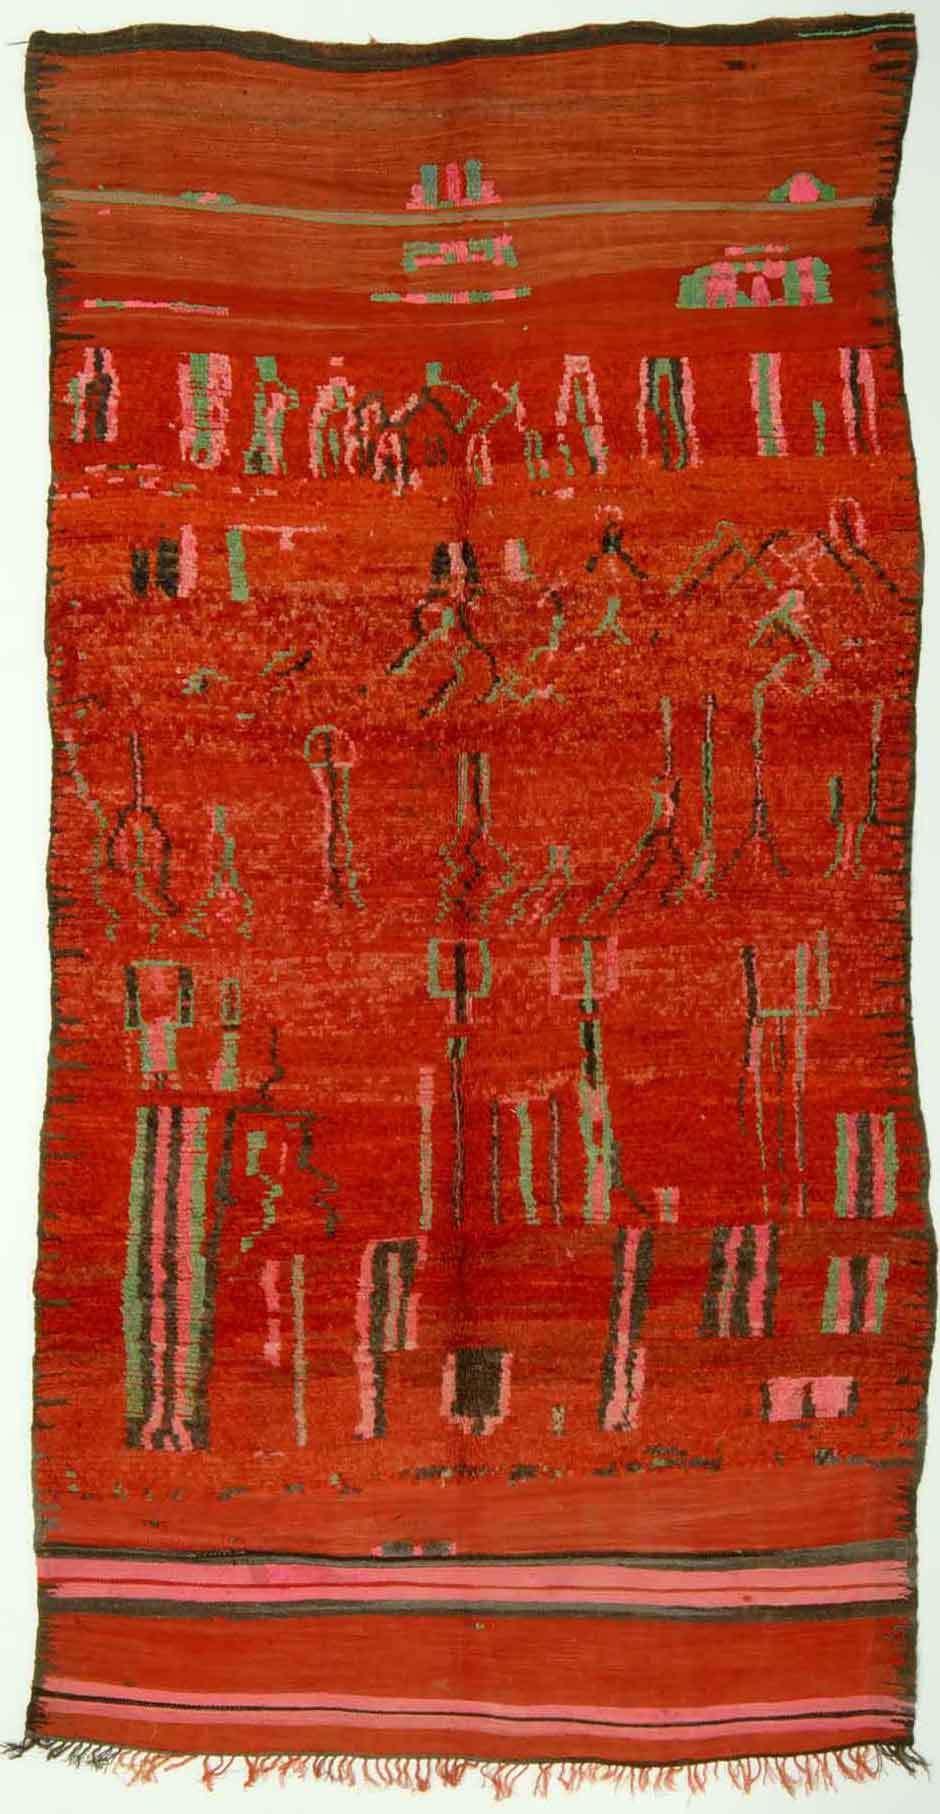 Rehamna carpet, Middle Atlas, Morocco, 20th century. Jürgen Adam Collection at The International Design Museum, Munich